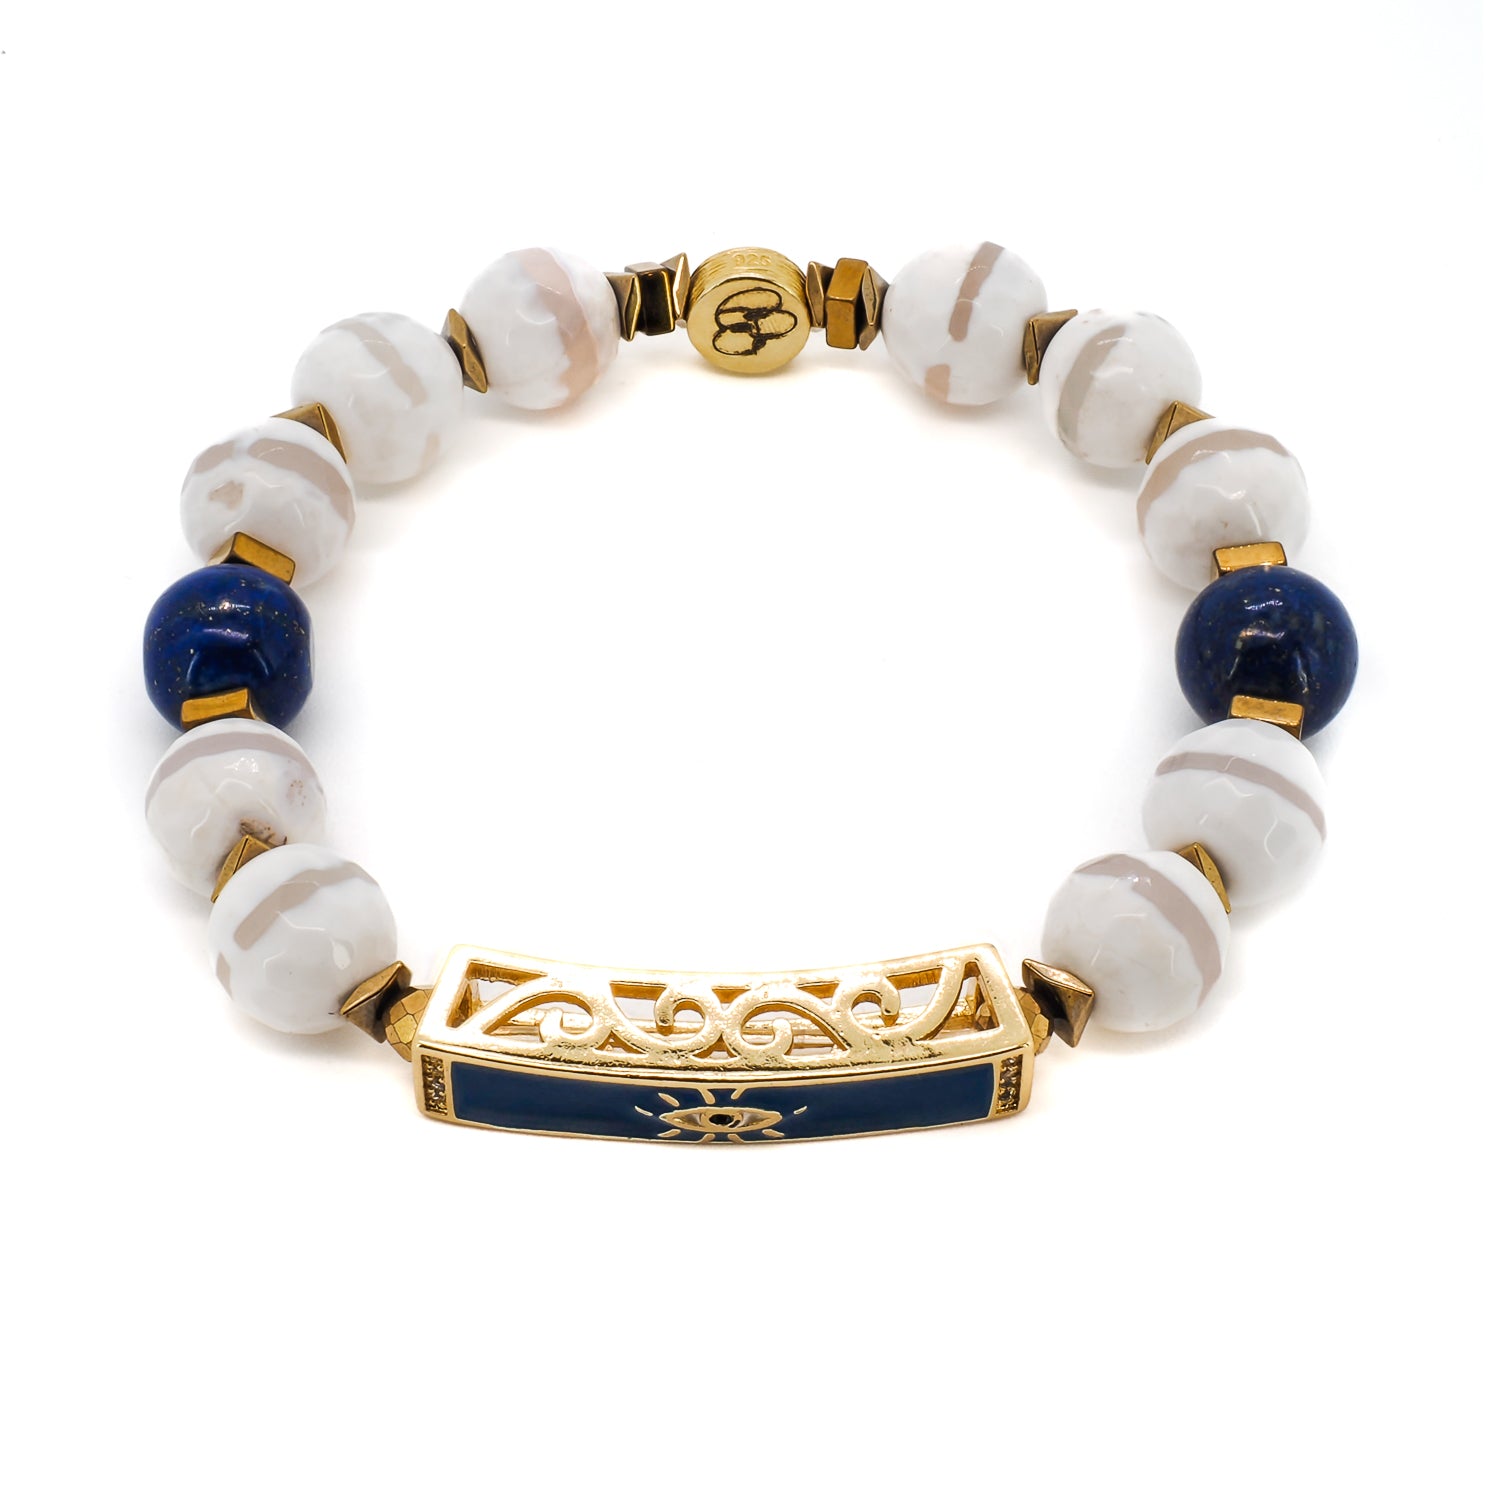 Vibrant blue and gold tones on the Blue Amulet Bracelet